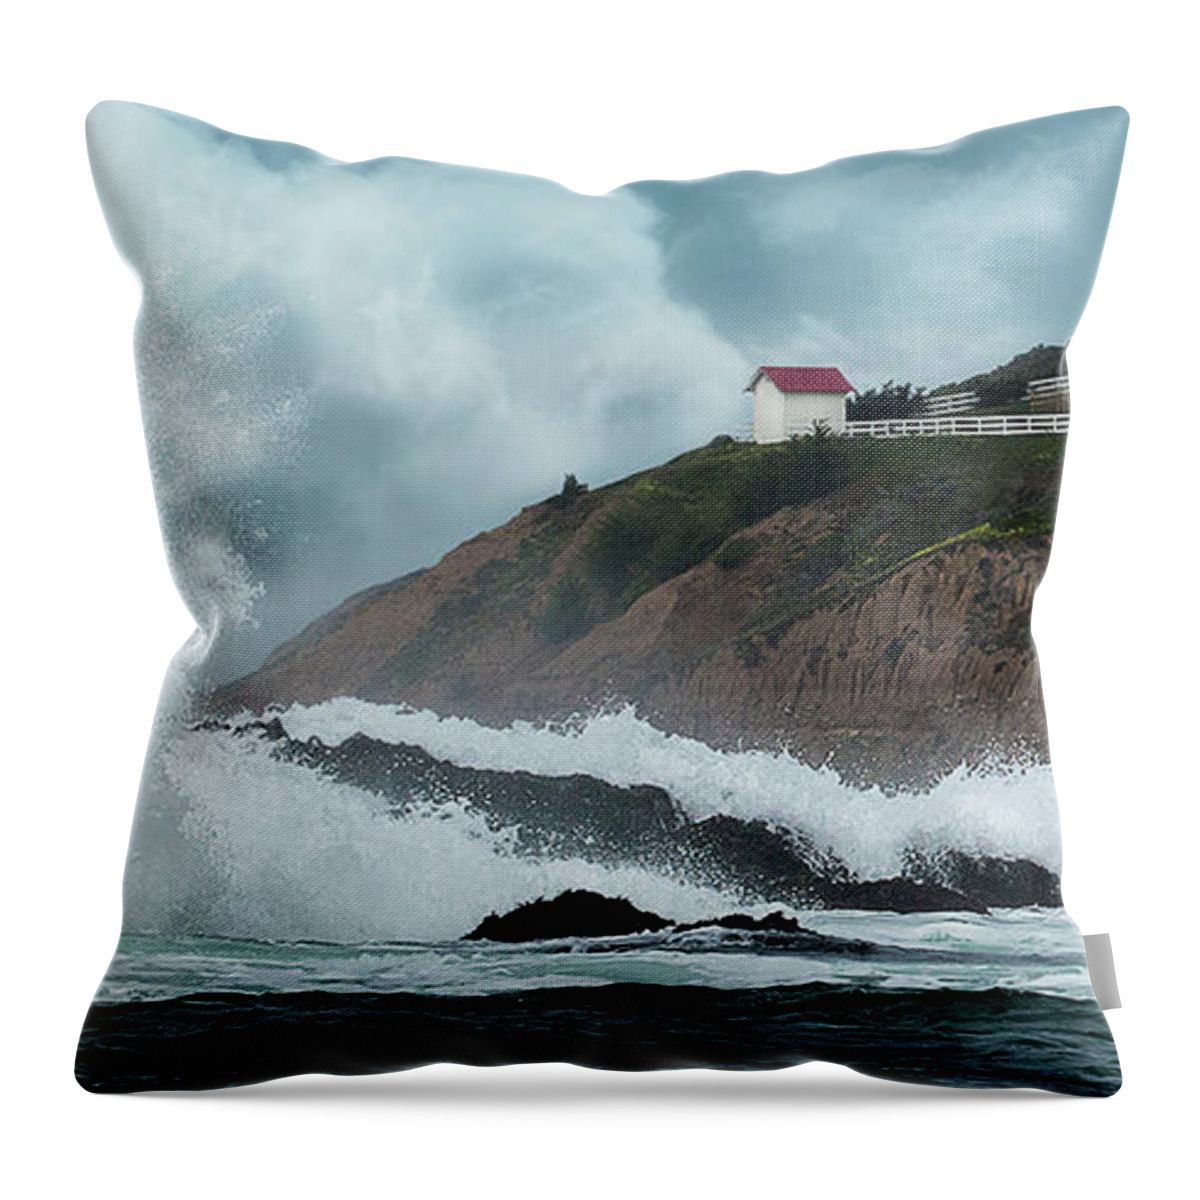 Landscape Throw Pillow featuring the photograph Point San Luis Lighthouse by Bruce Bonnett